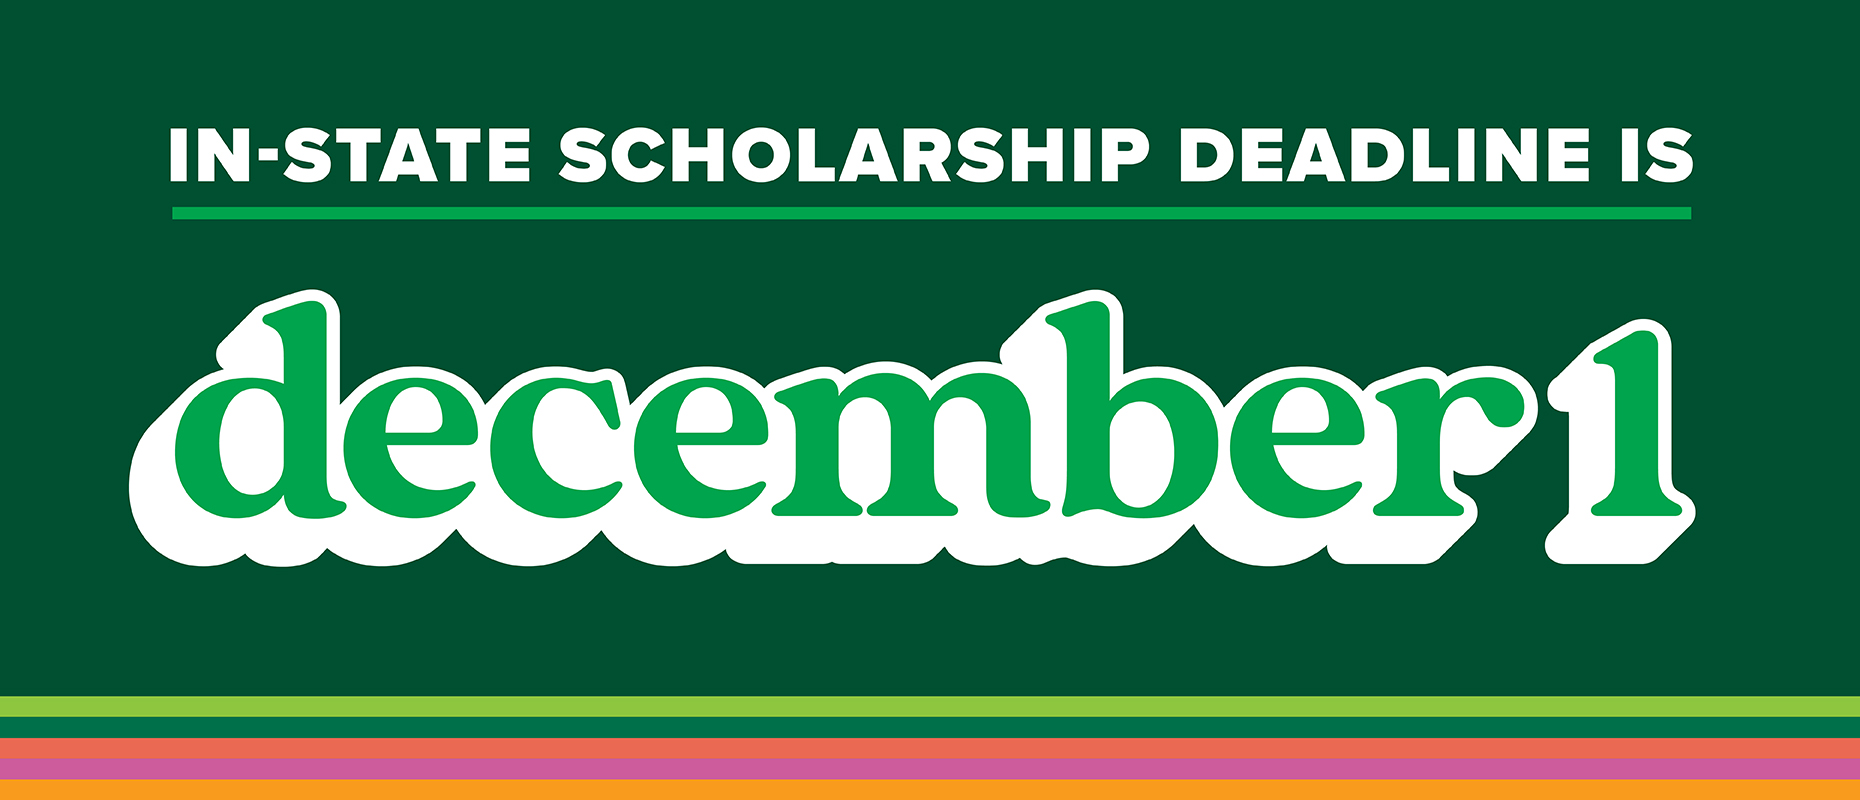 In-state scholarship deadline is December 1.